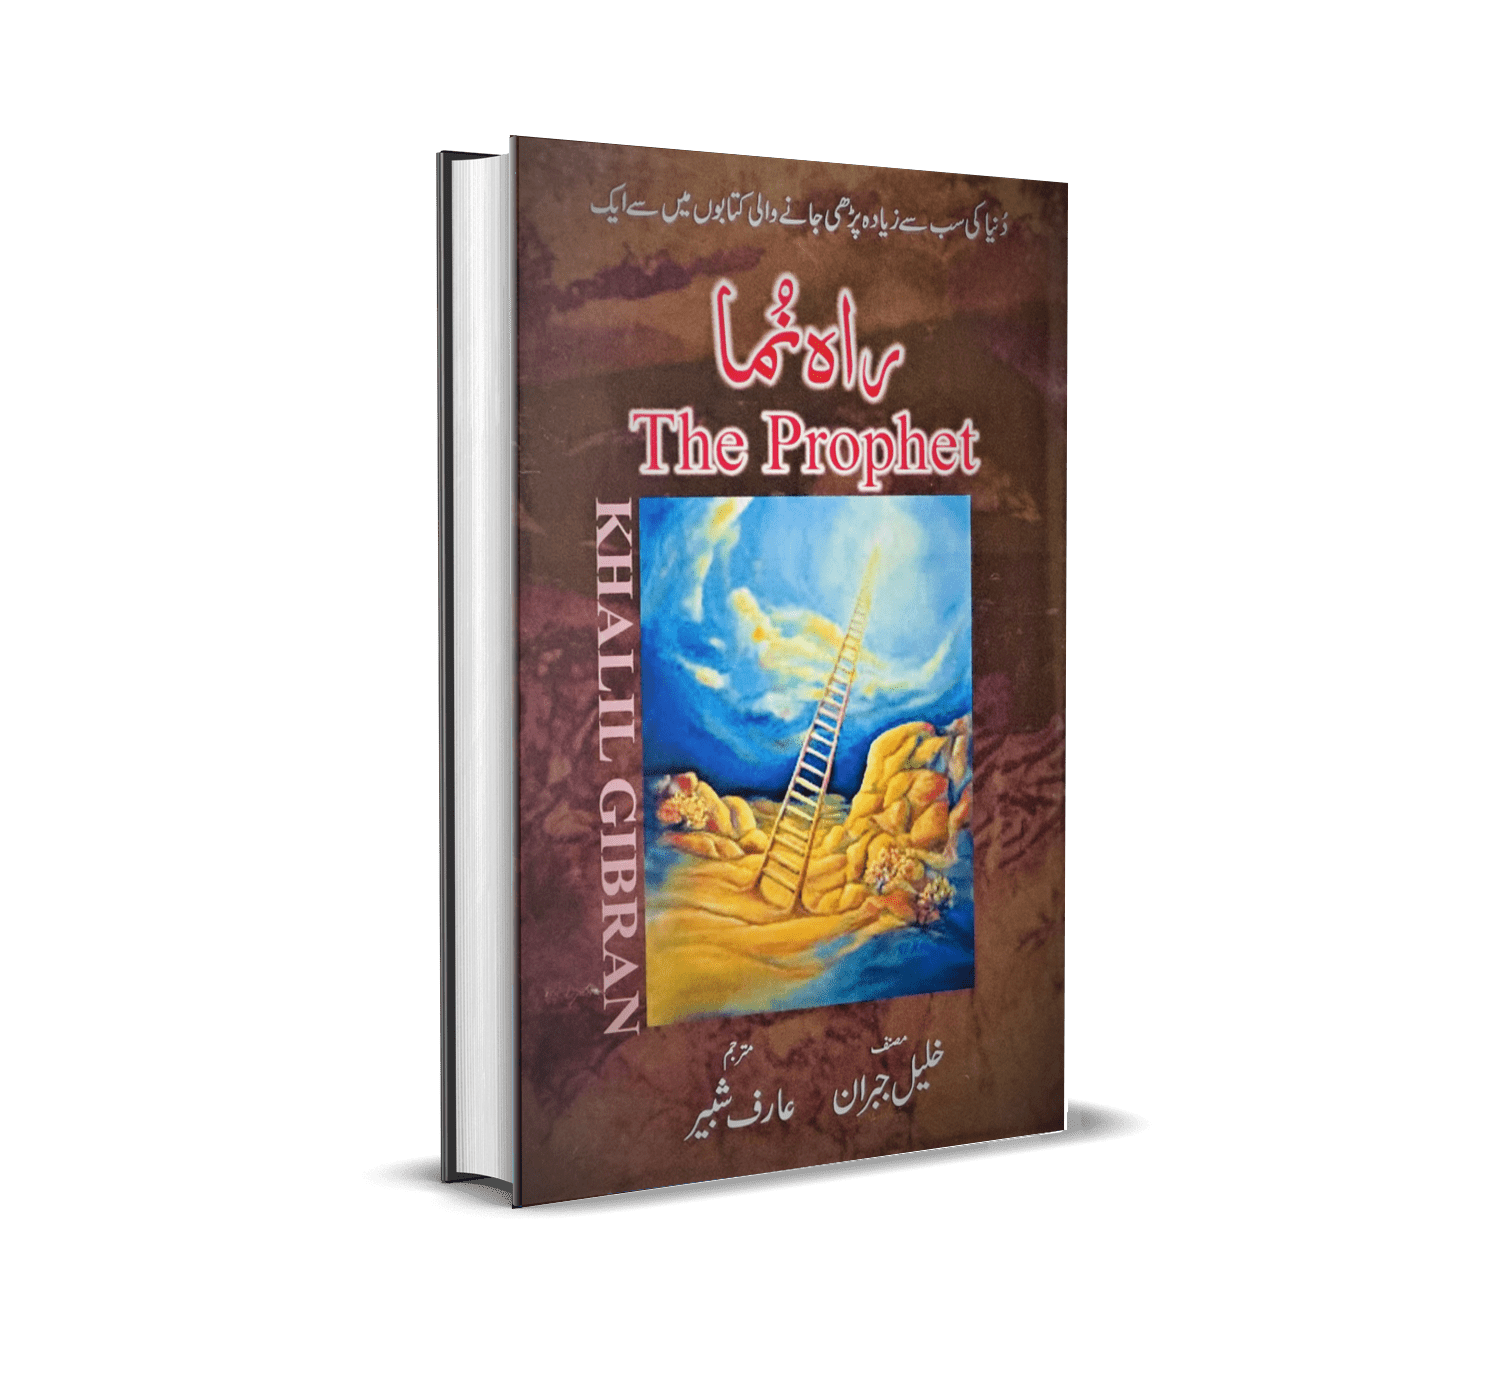 The Prophet by Khalil Gibran Urdu